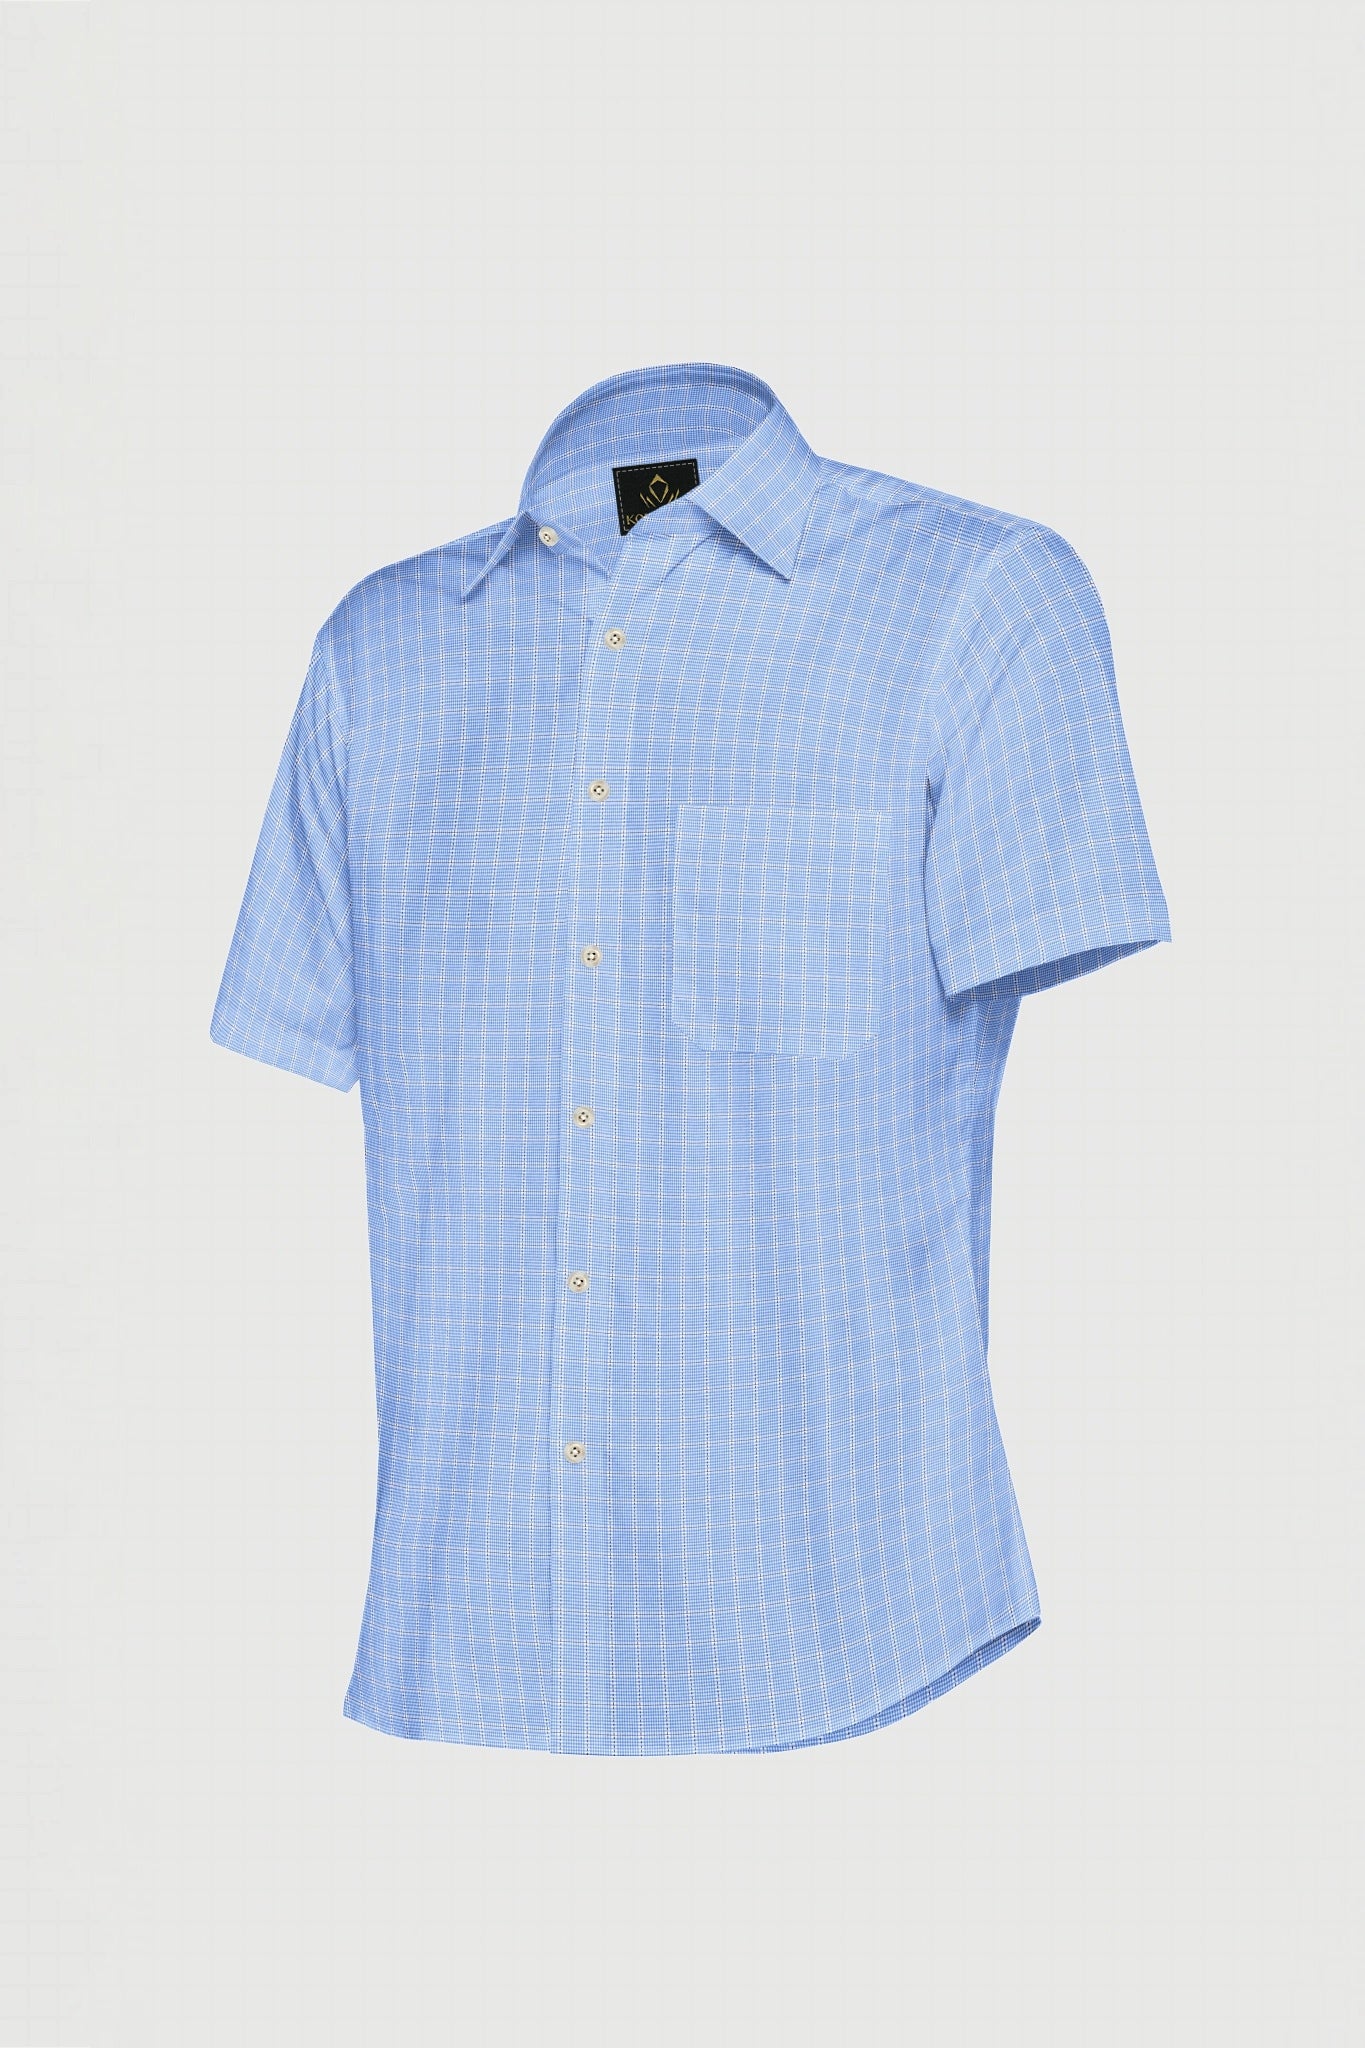 White and Placid Blue Checks Cotton Shirt